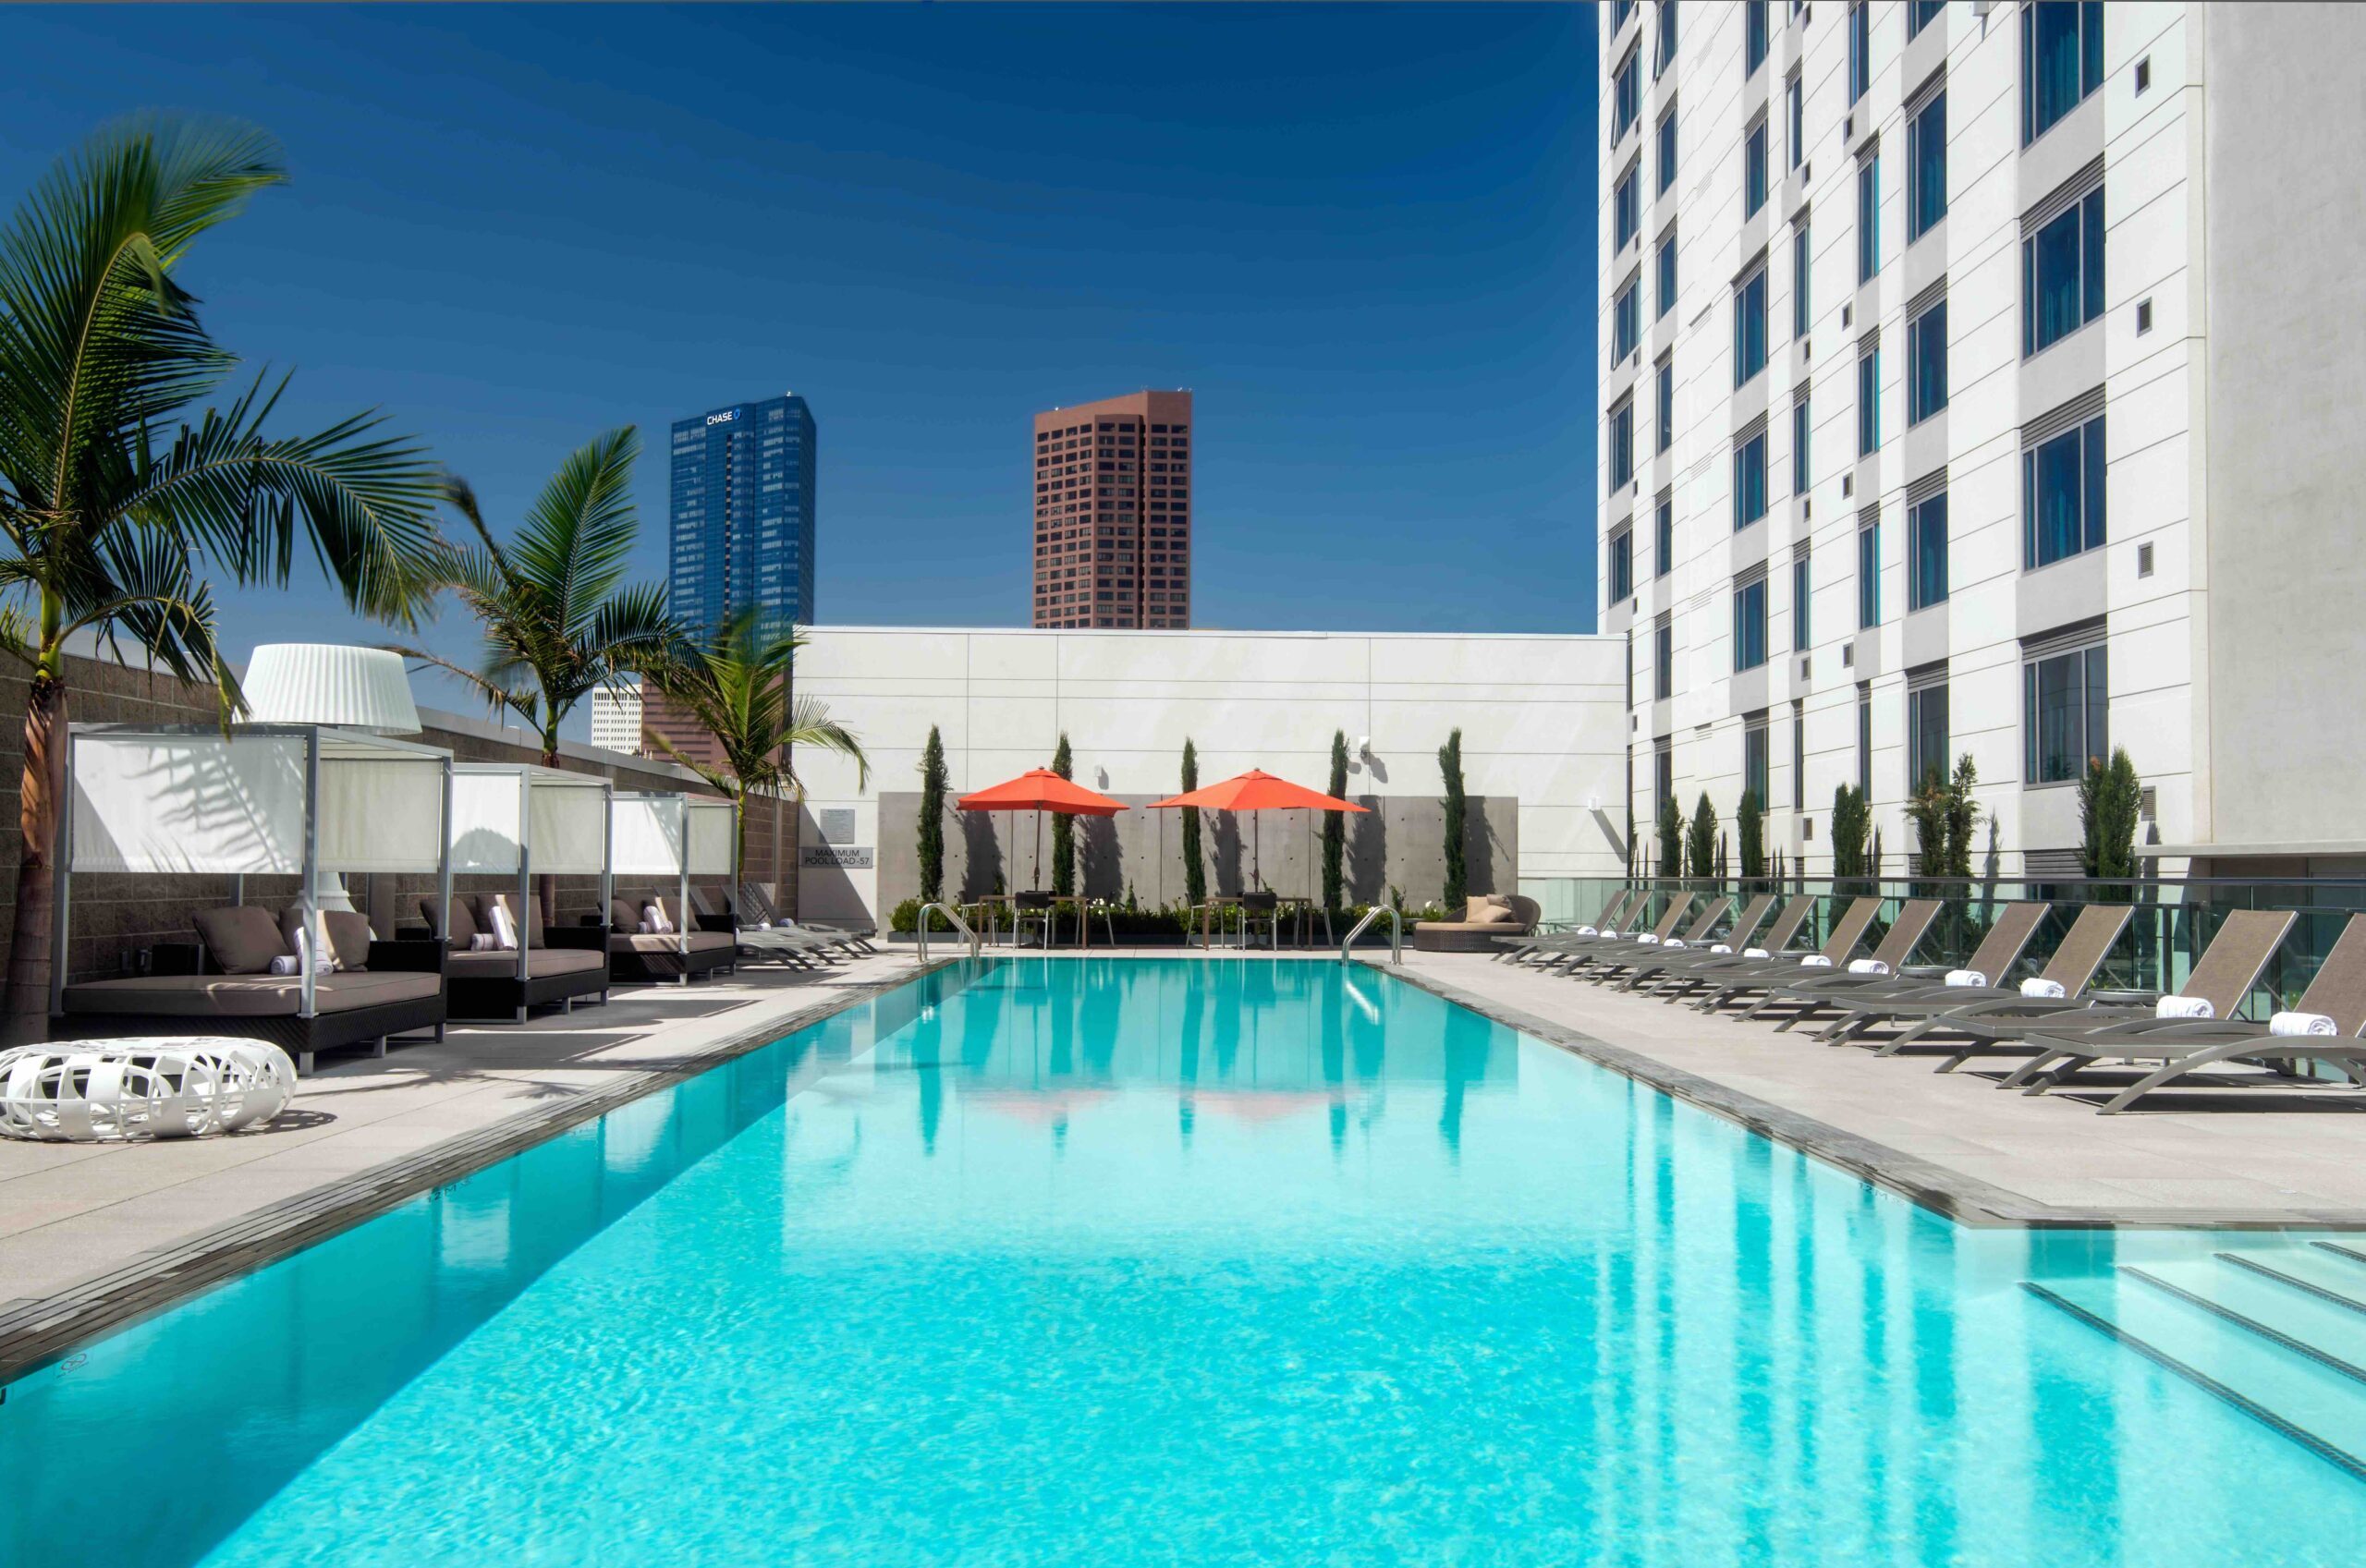 Marriot Residence Inn at LA Live - Poolside